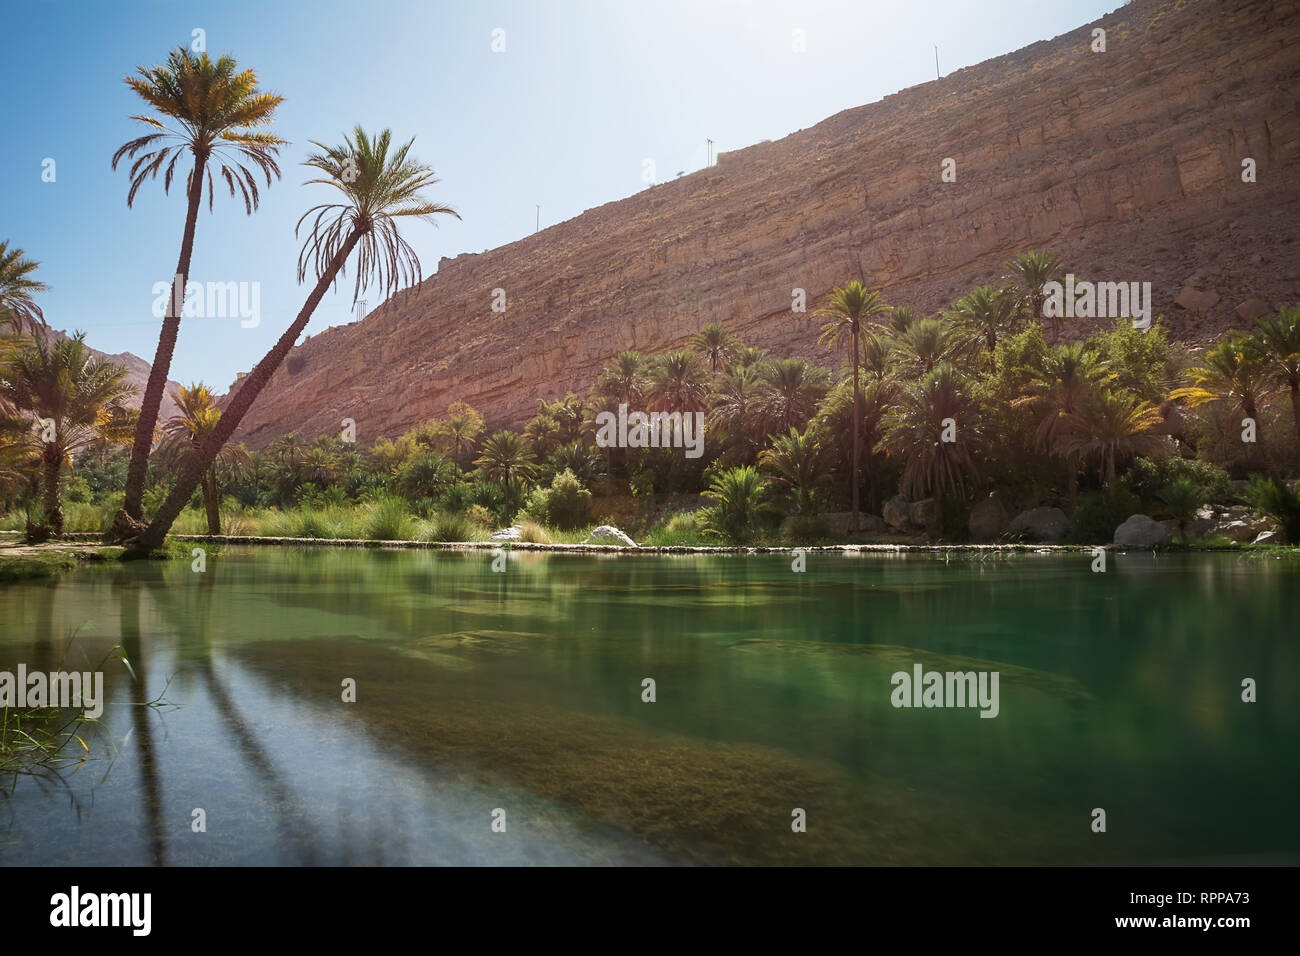 Amazing Lake and oasis with palm trees (Wadi Bani Khalid) in the Omani desert Stock Photo